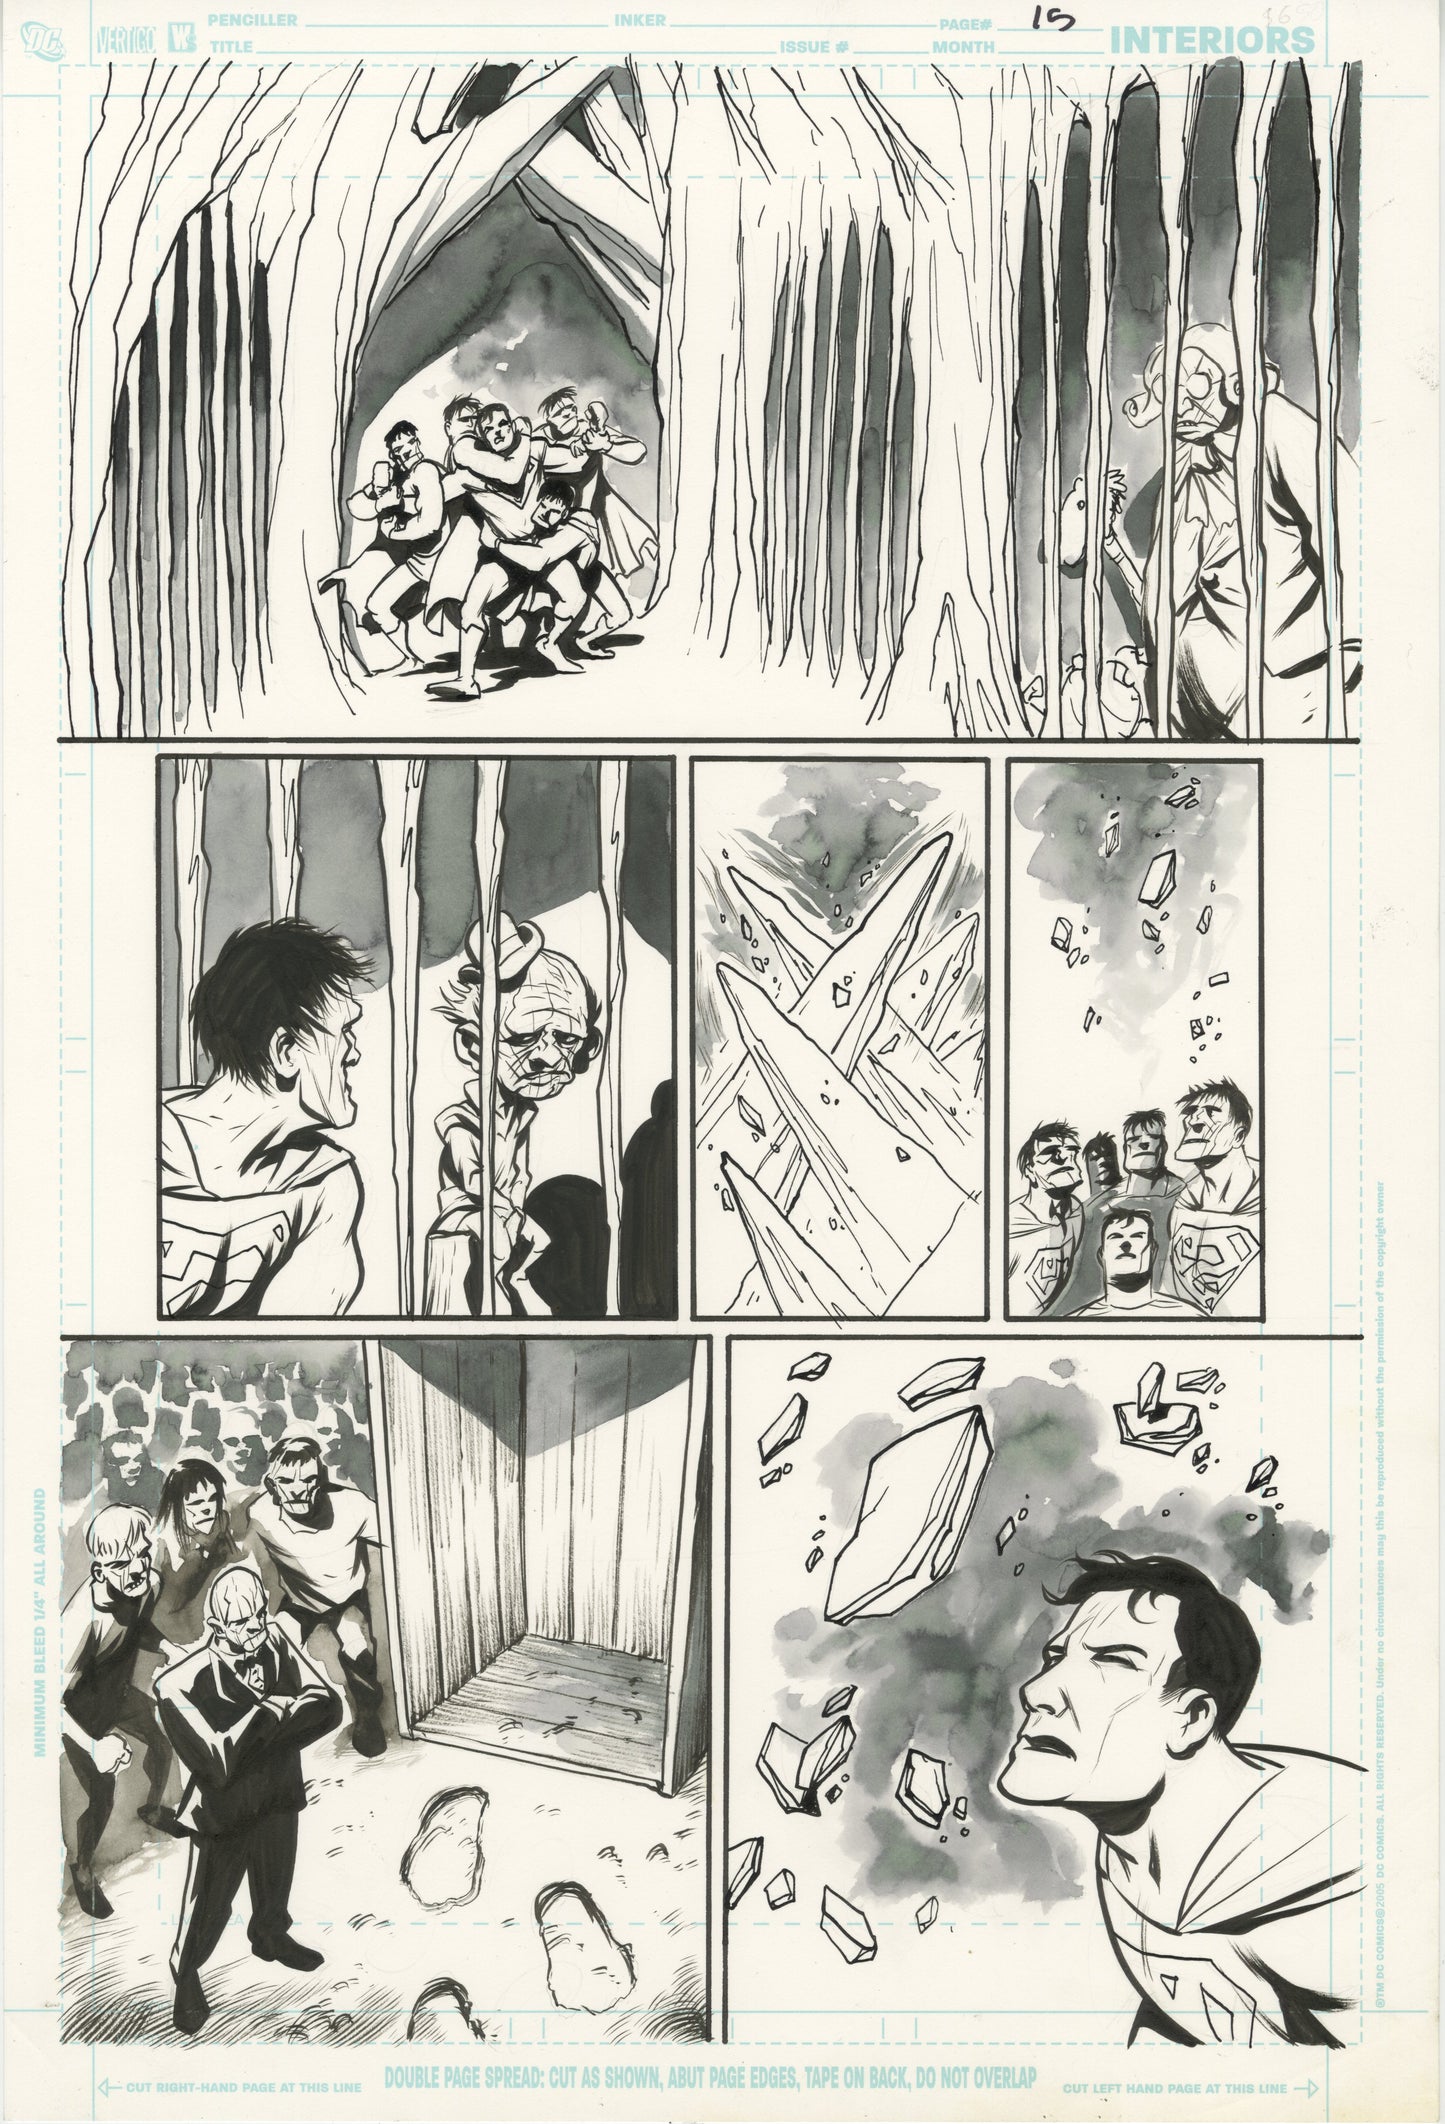 Action Comics #856, Page #15 (2007 DC, Superman: Escape From Bizarro World)